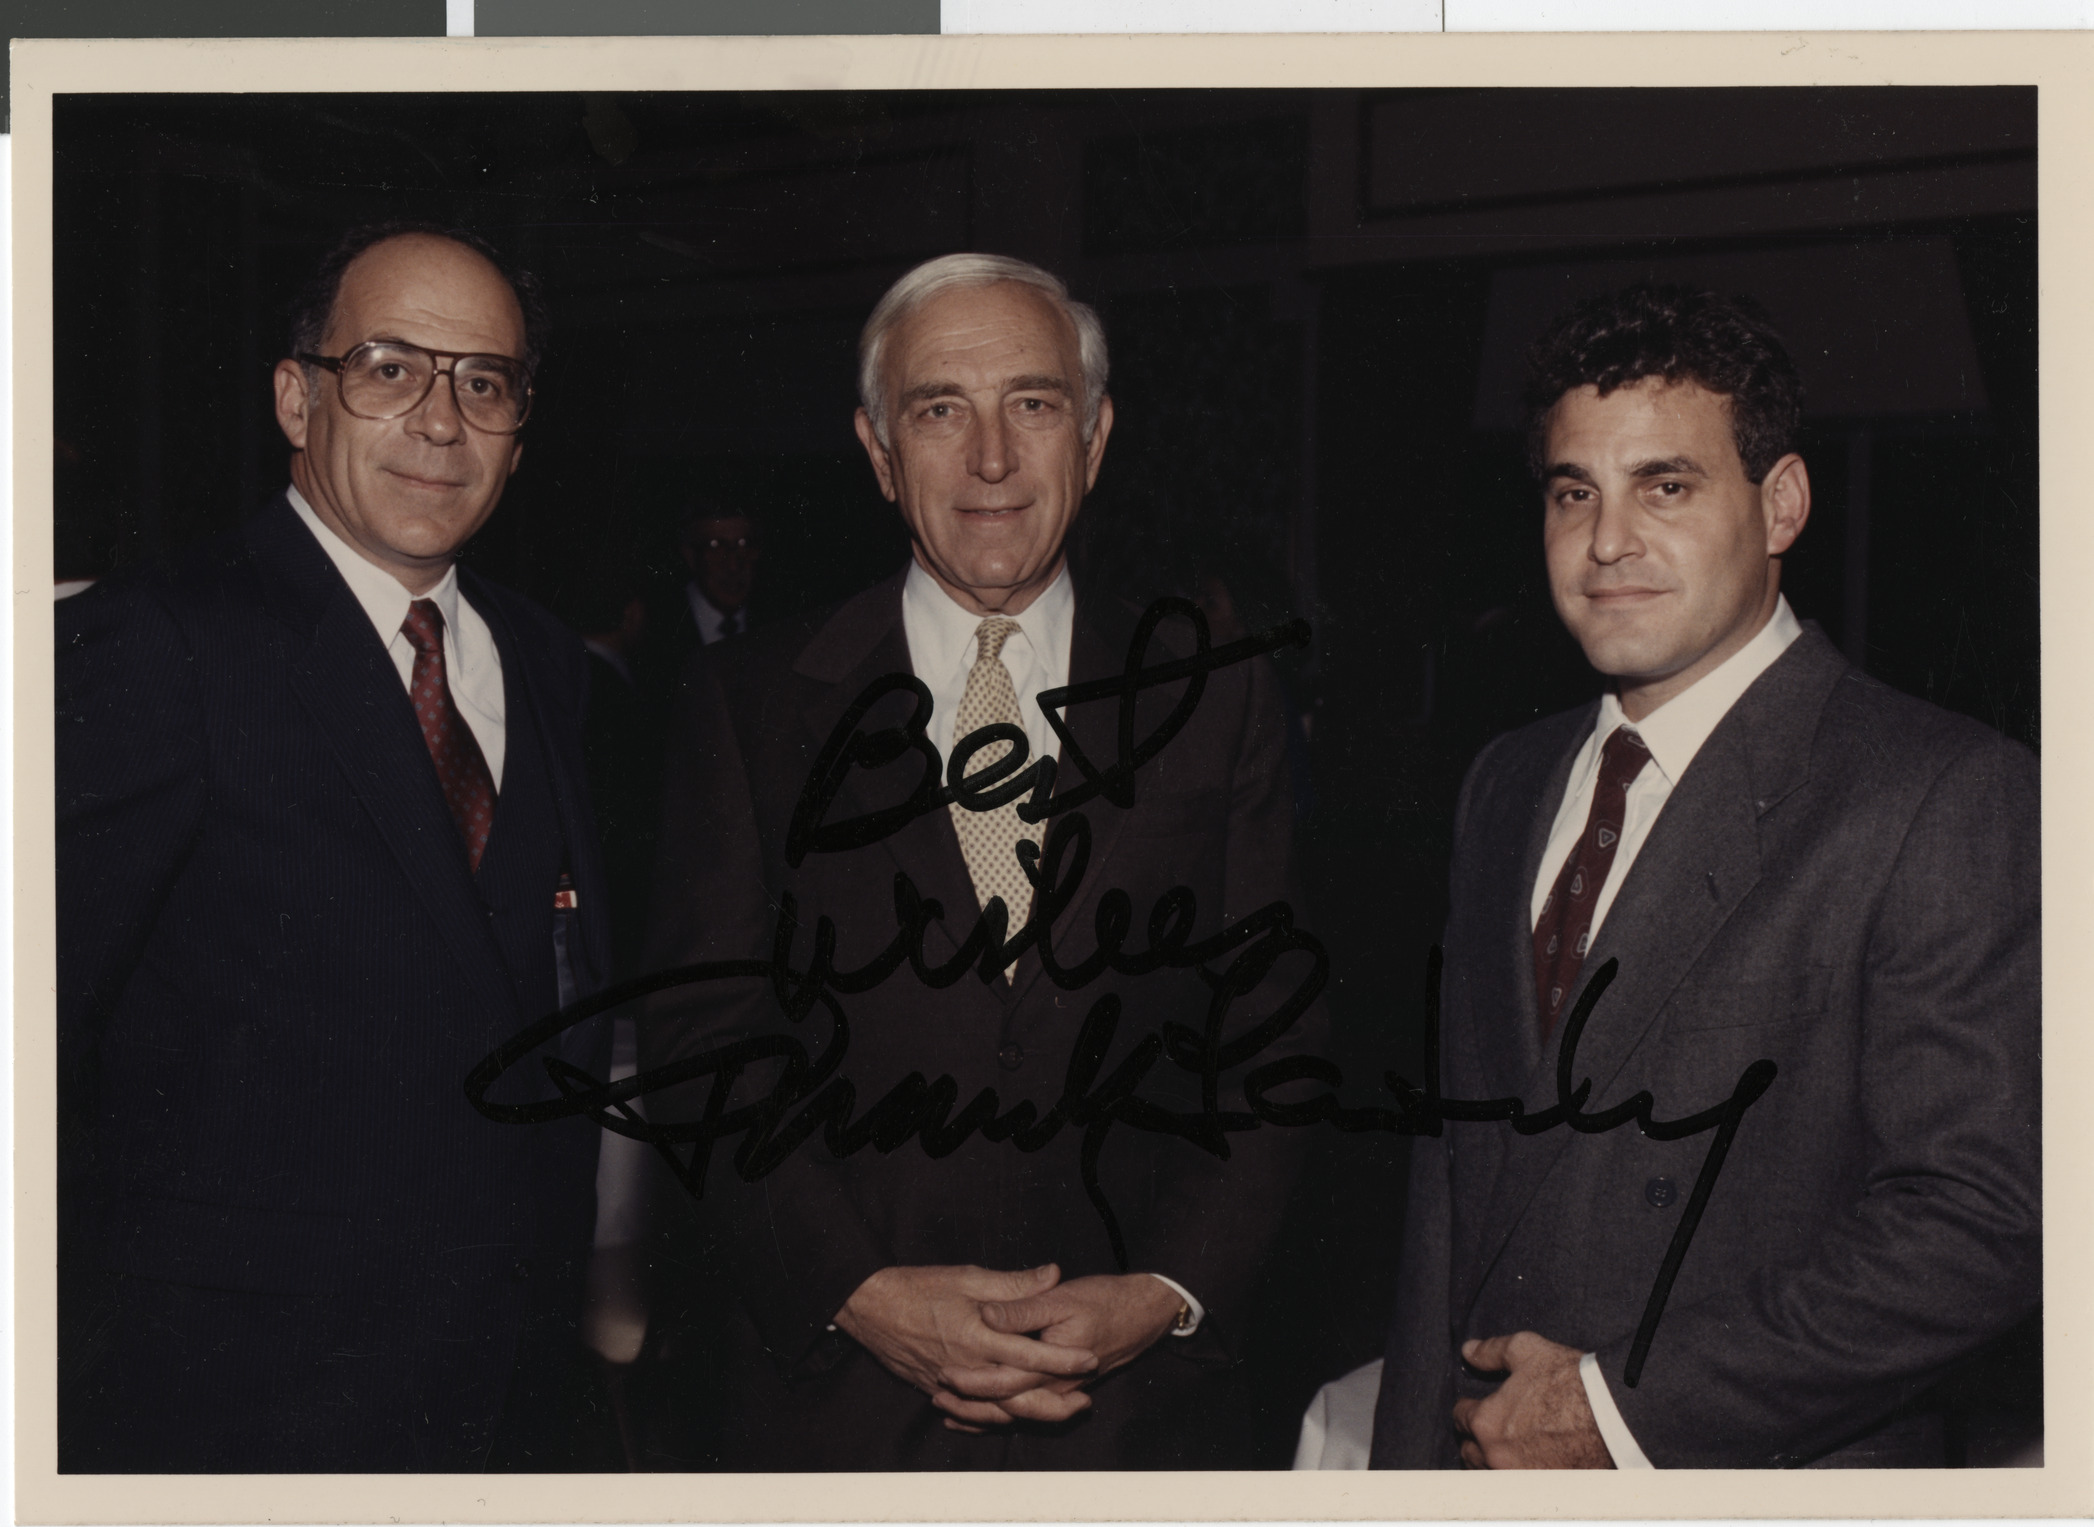 Photograph of Dennis Sabbath, Senator Frank Lautenberg and Steven Molasky, date unknown